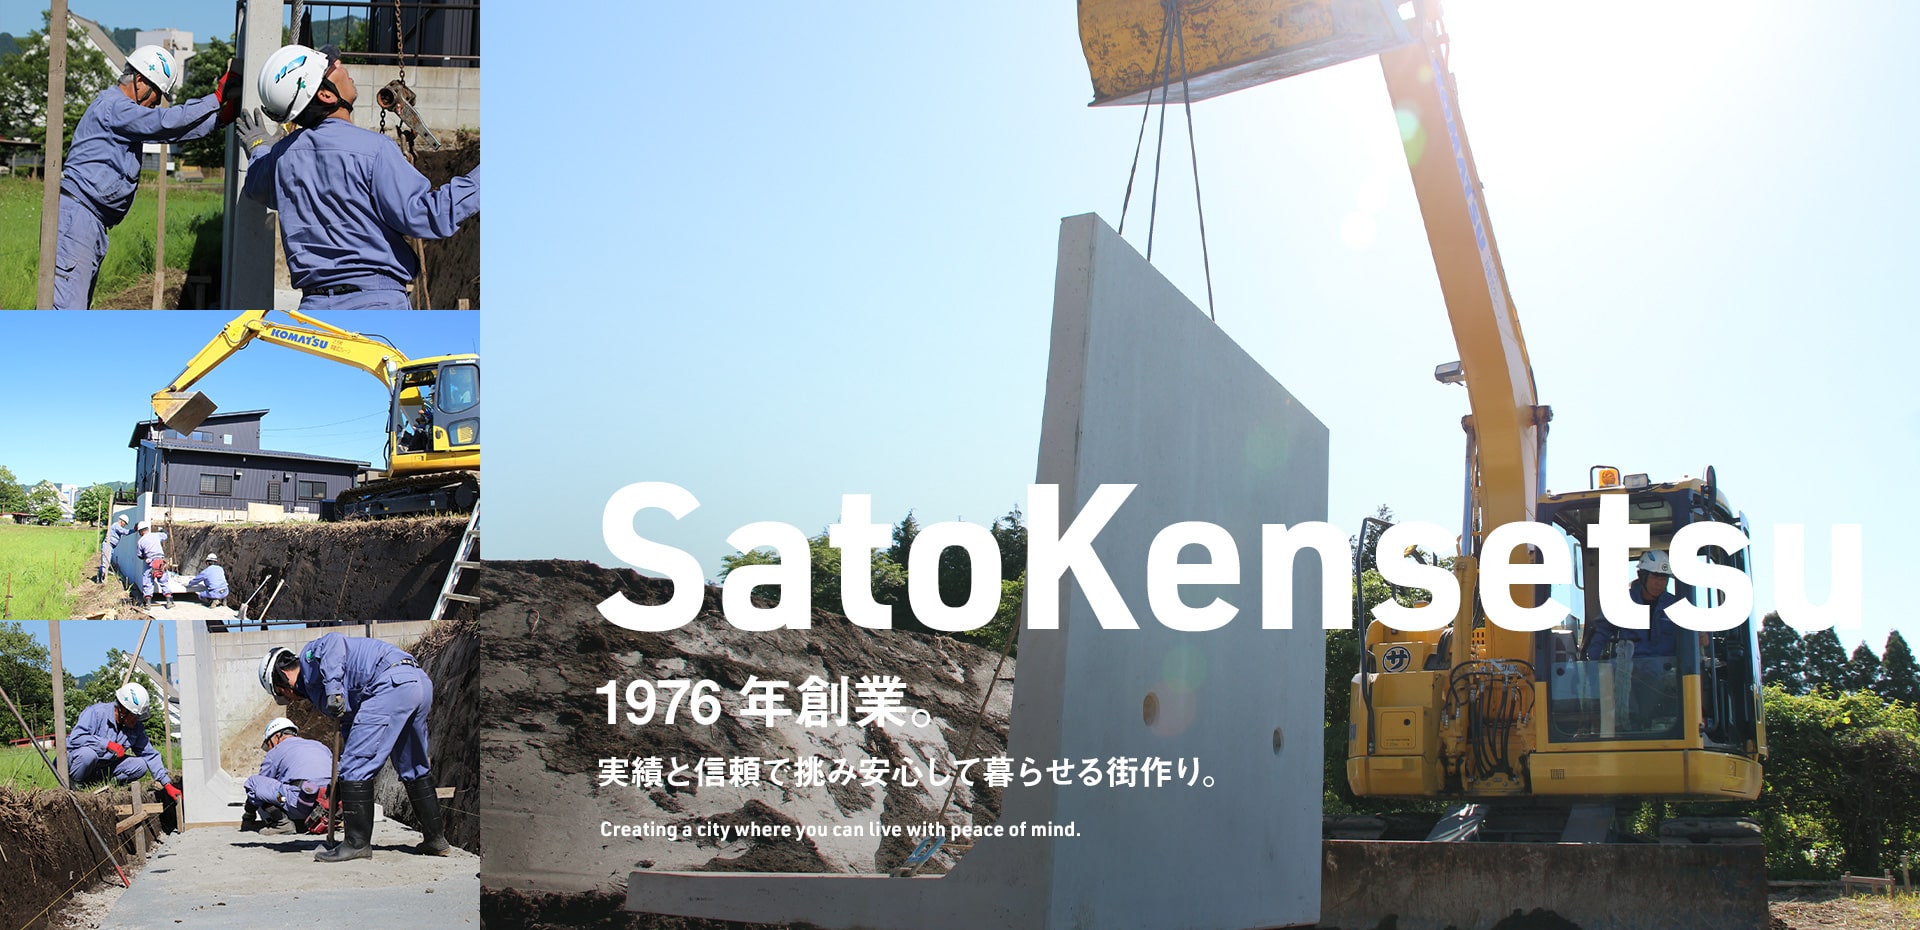 Sayo Kensetsu 1976年創業。実績と信頼で挑み安心して暮らせる街作り。